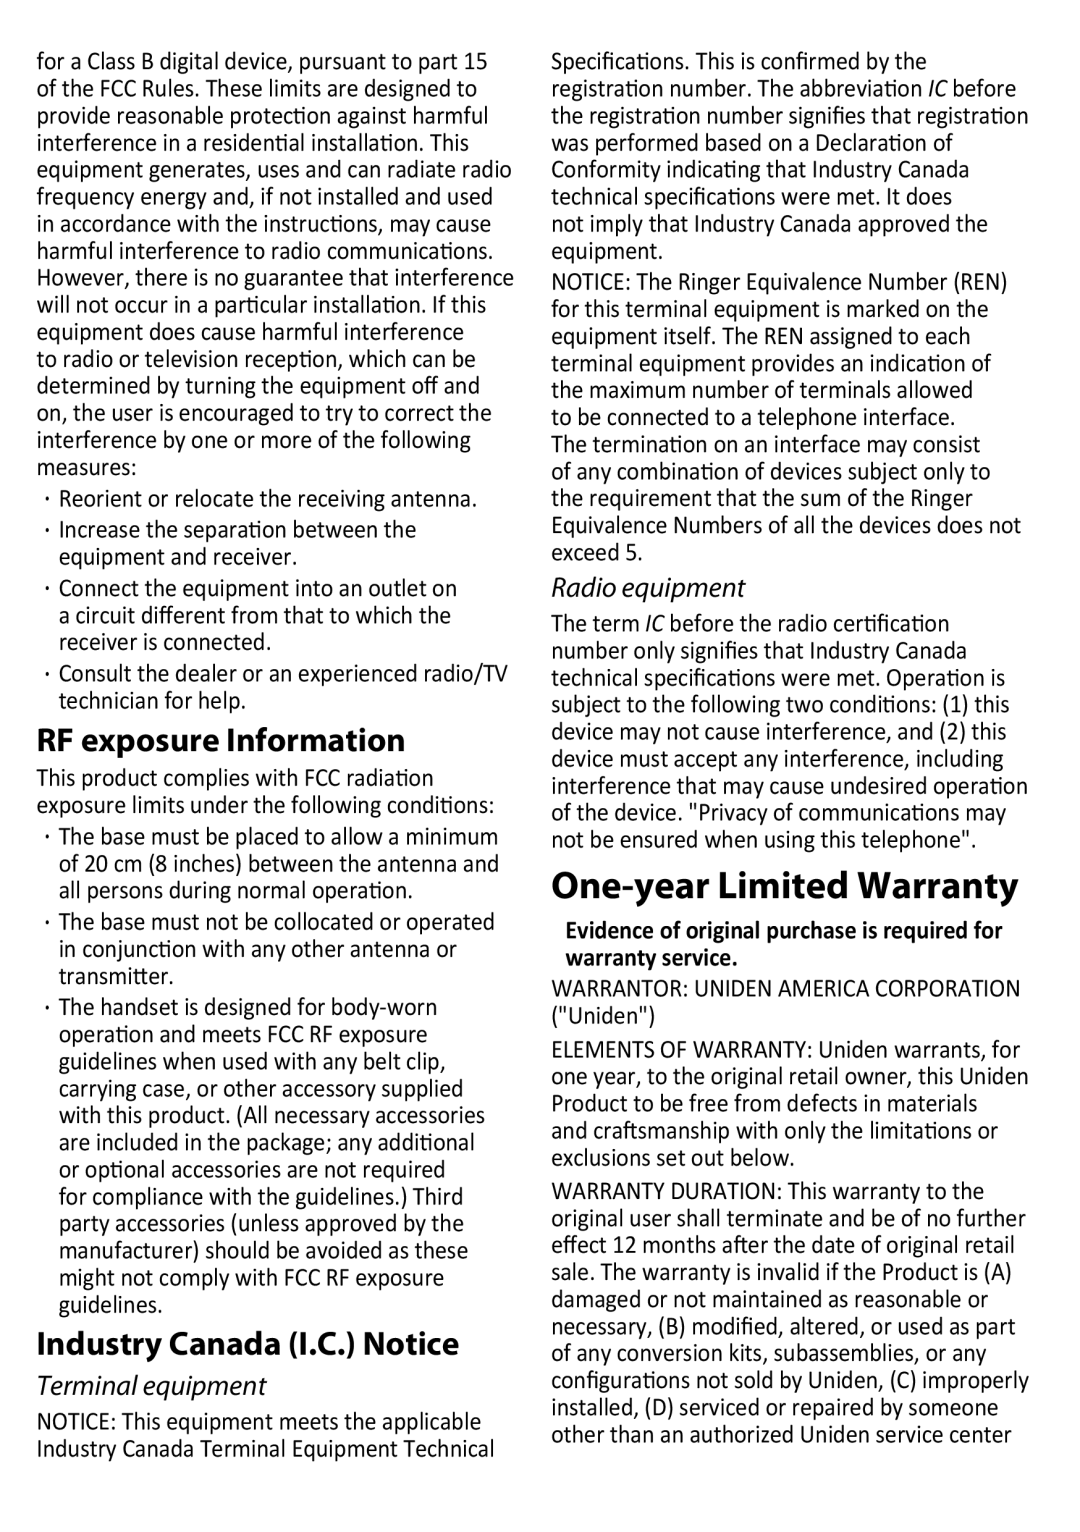 Uniden D3097 manual One-year Limited Warranty 